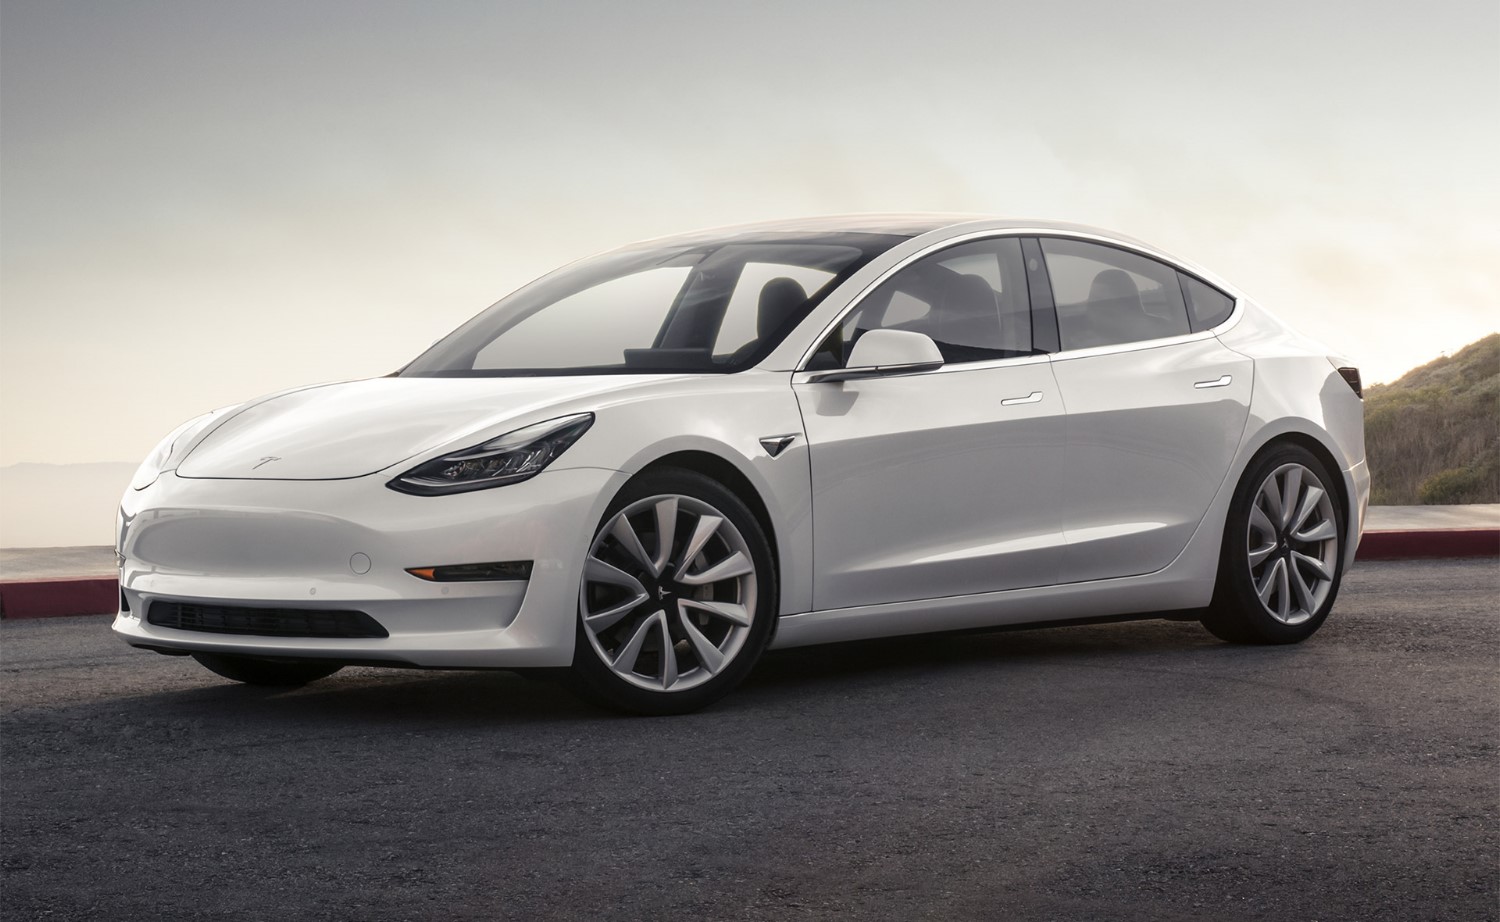 The Tesla Model 3 is selling like hotcakes